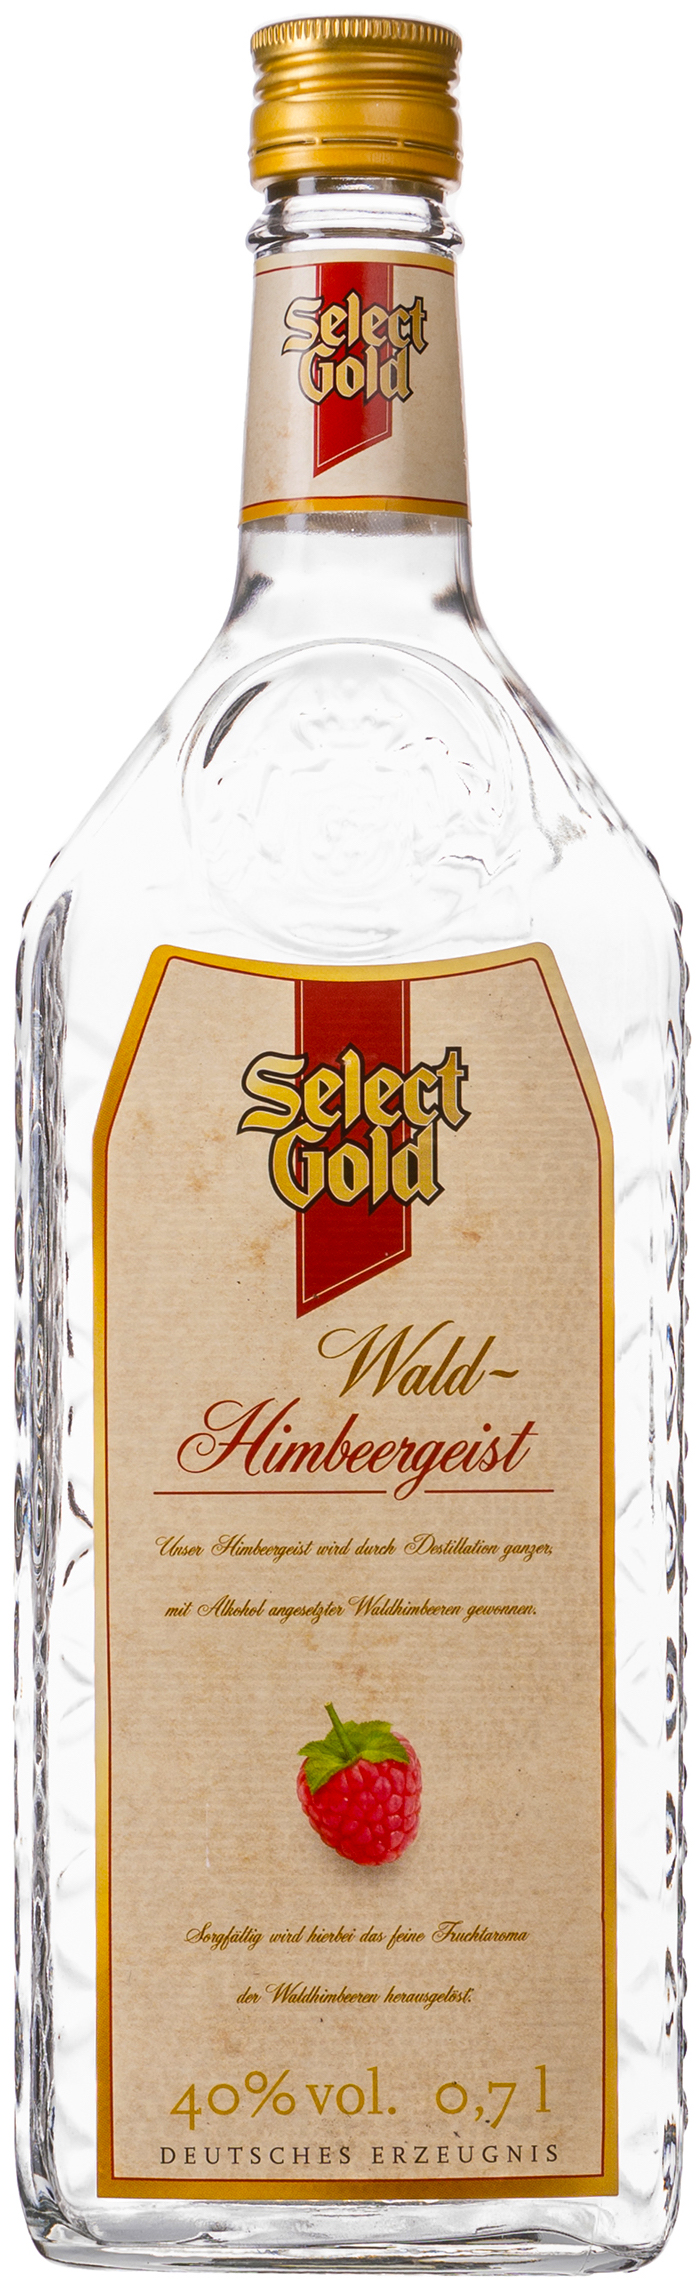 Select Gold Waldhimbeergeist 40% vol. 0,7L